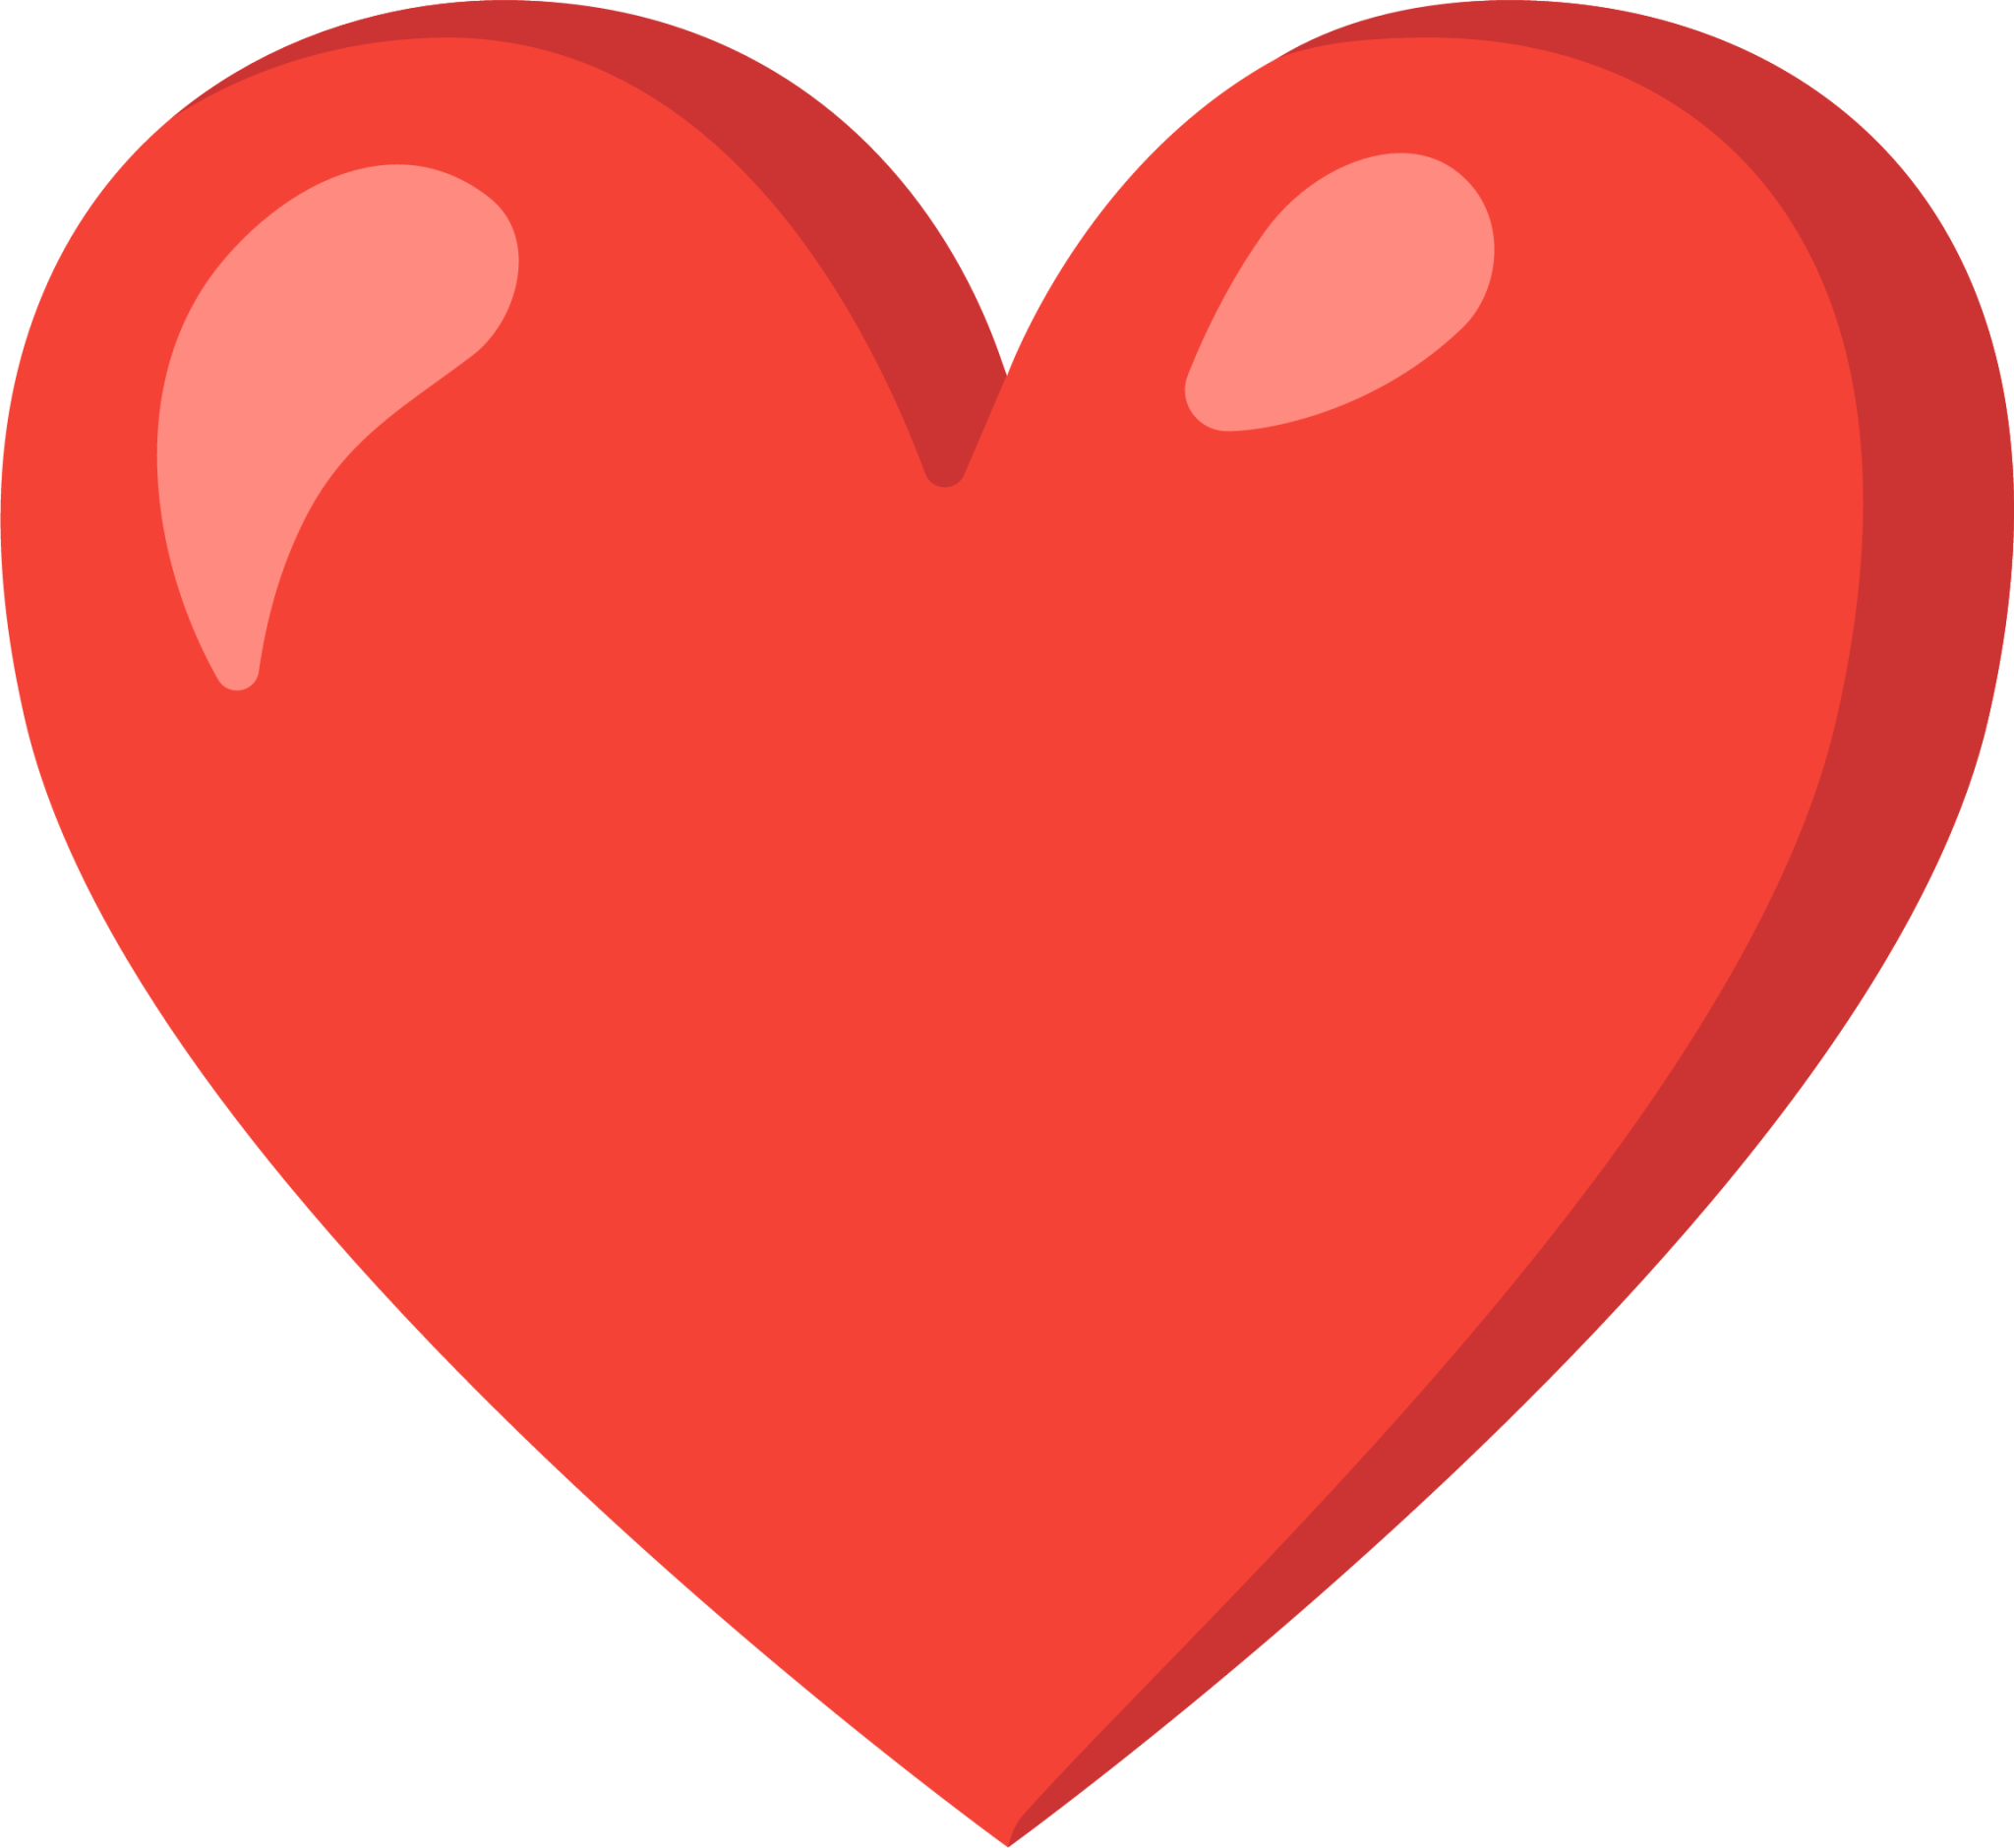 Emoji Heart PNG Image File